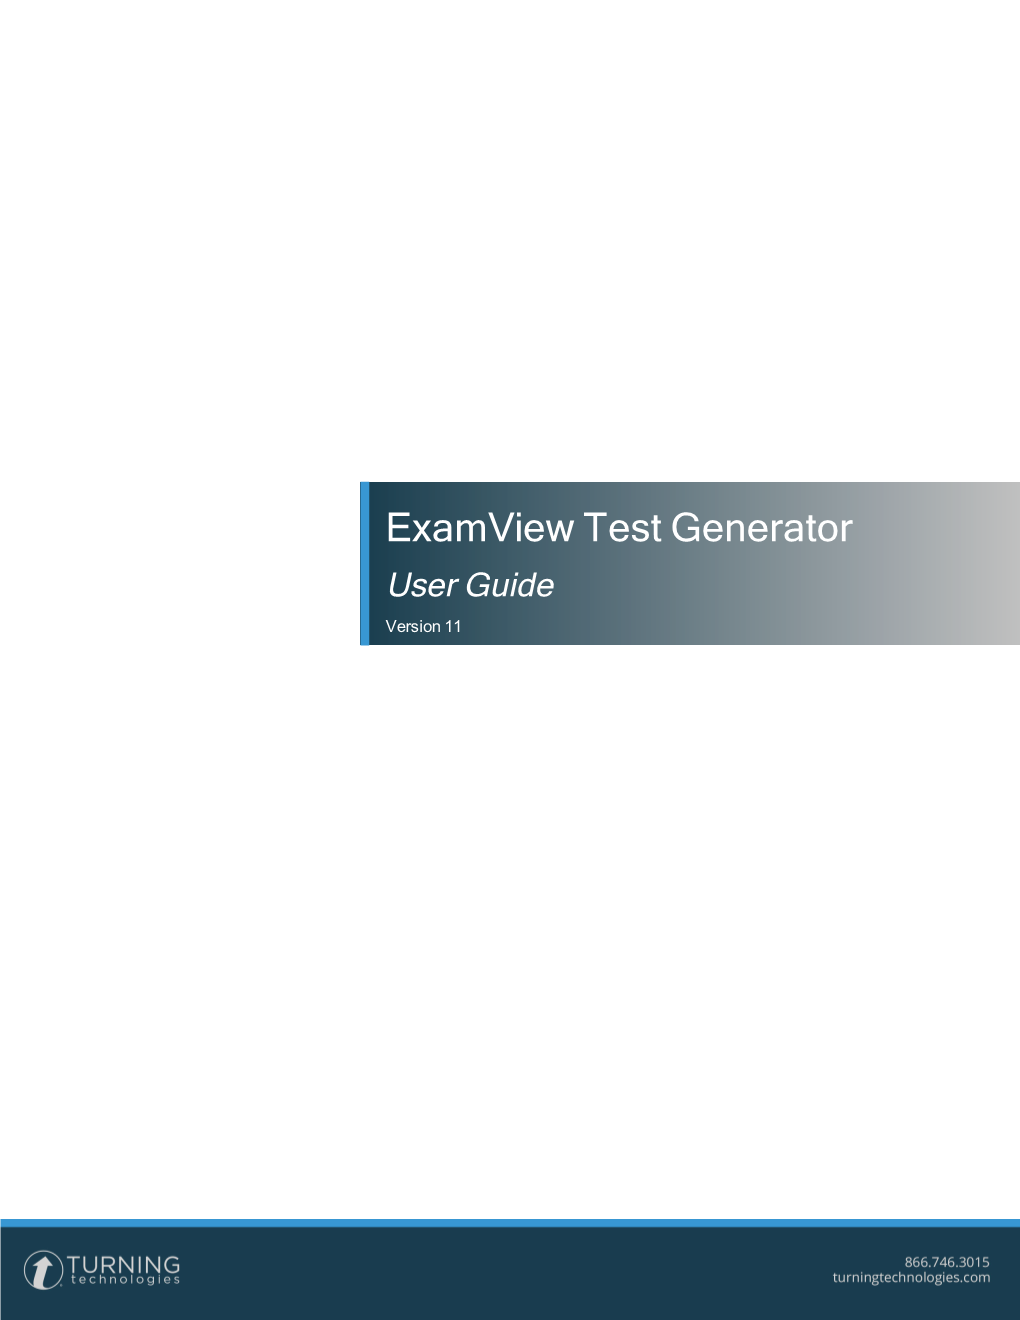 Examview Test Generator User Guide Version 11 Examview Test Generator 2